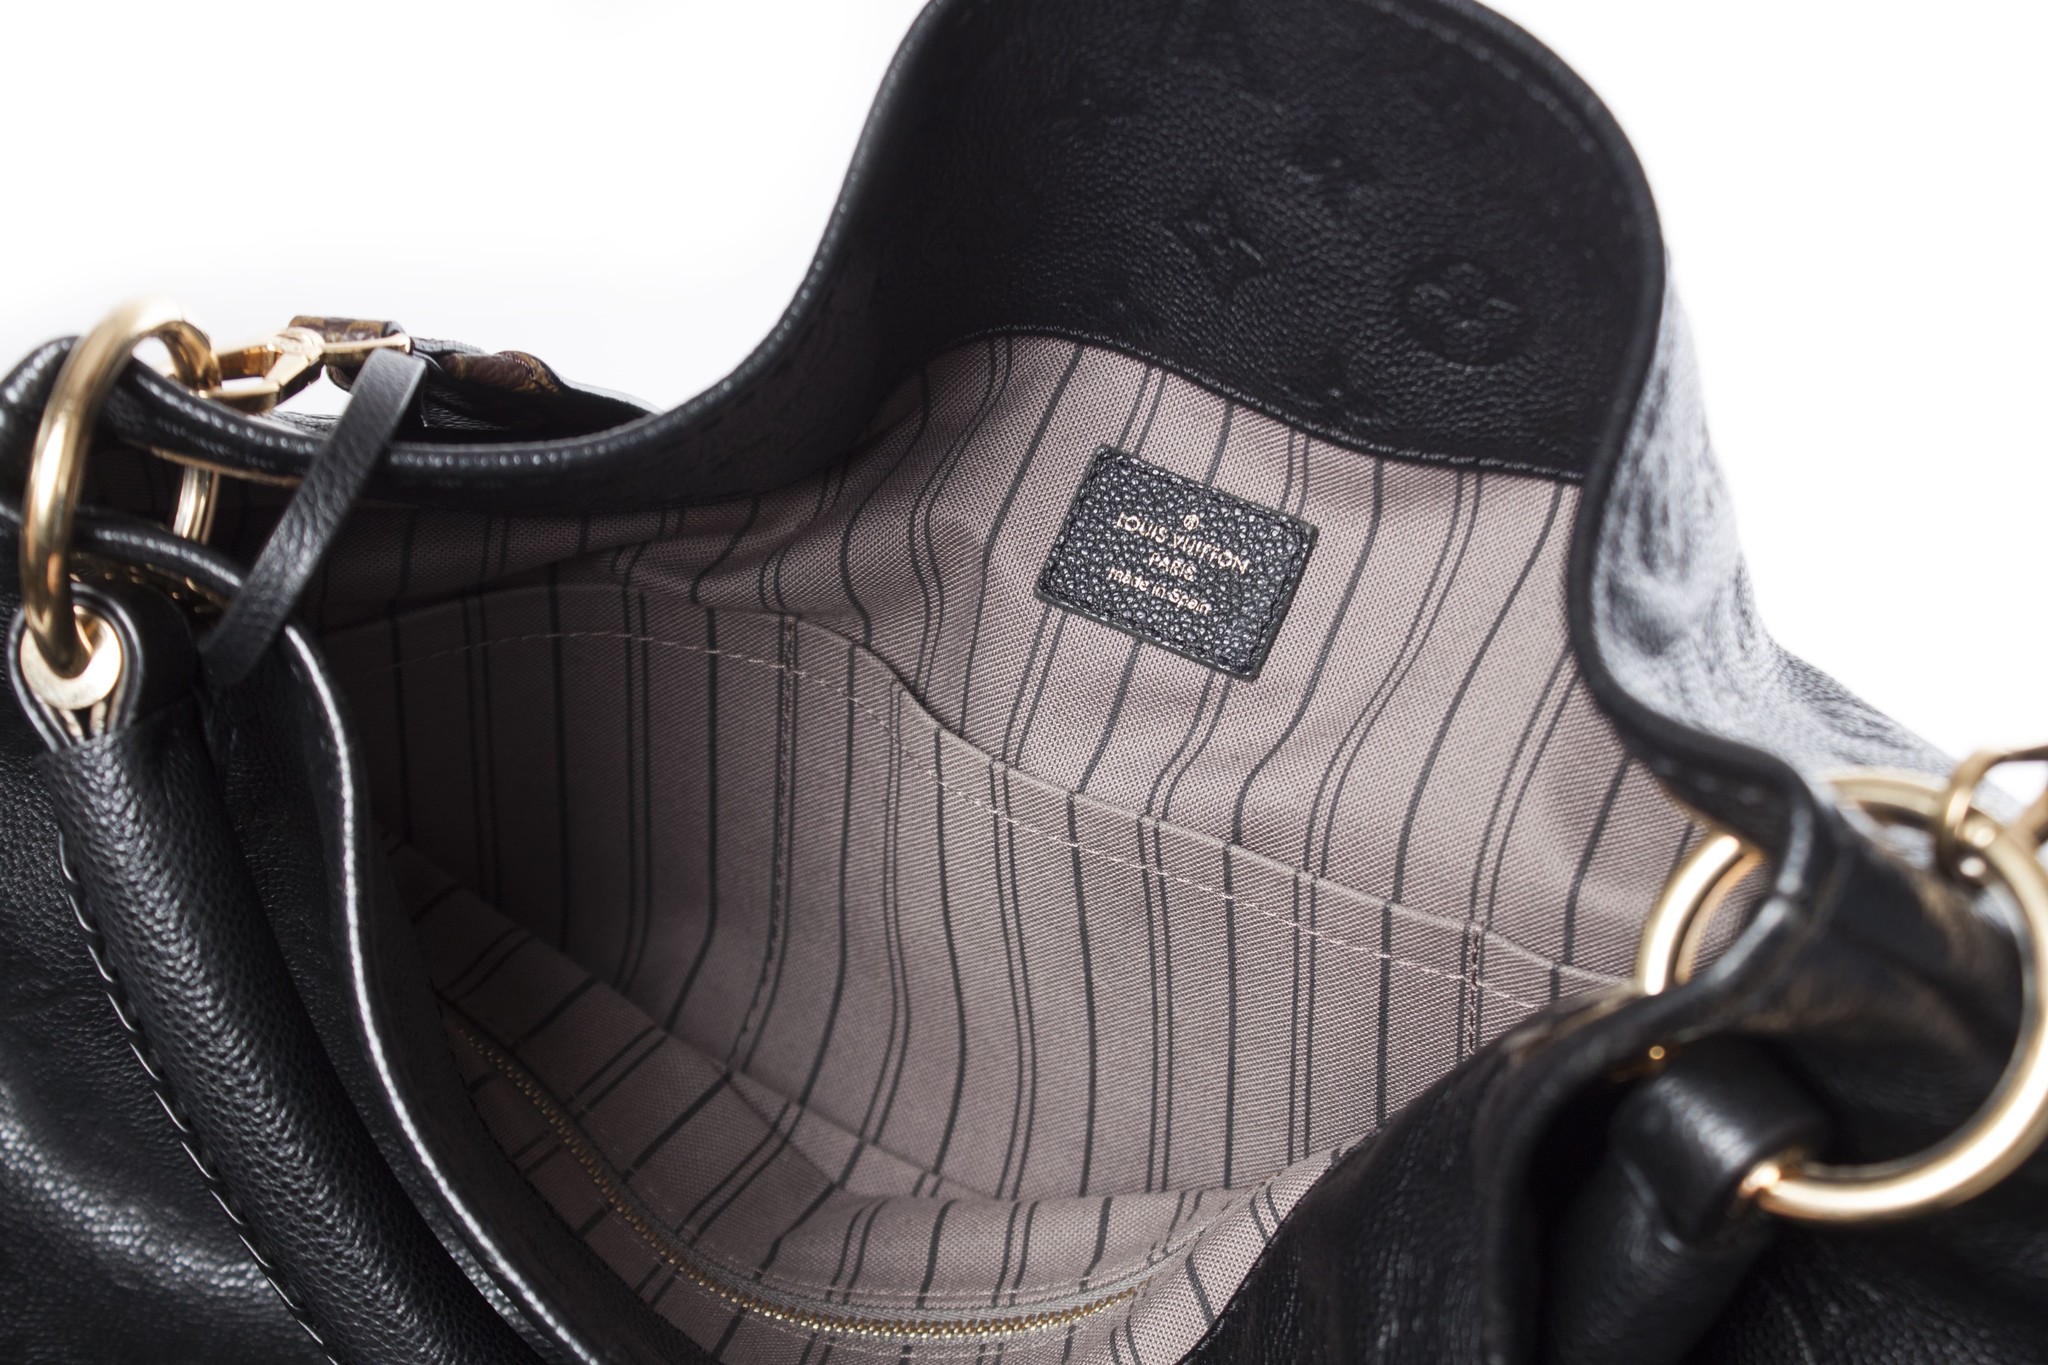 Louis Vuitton Artsy MM black leather look